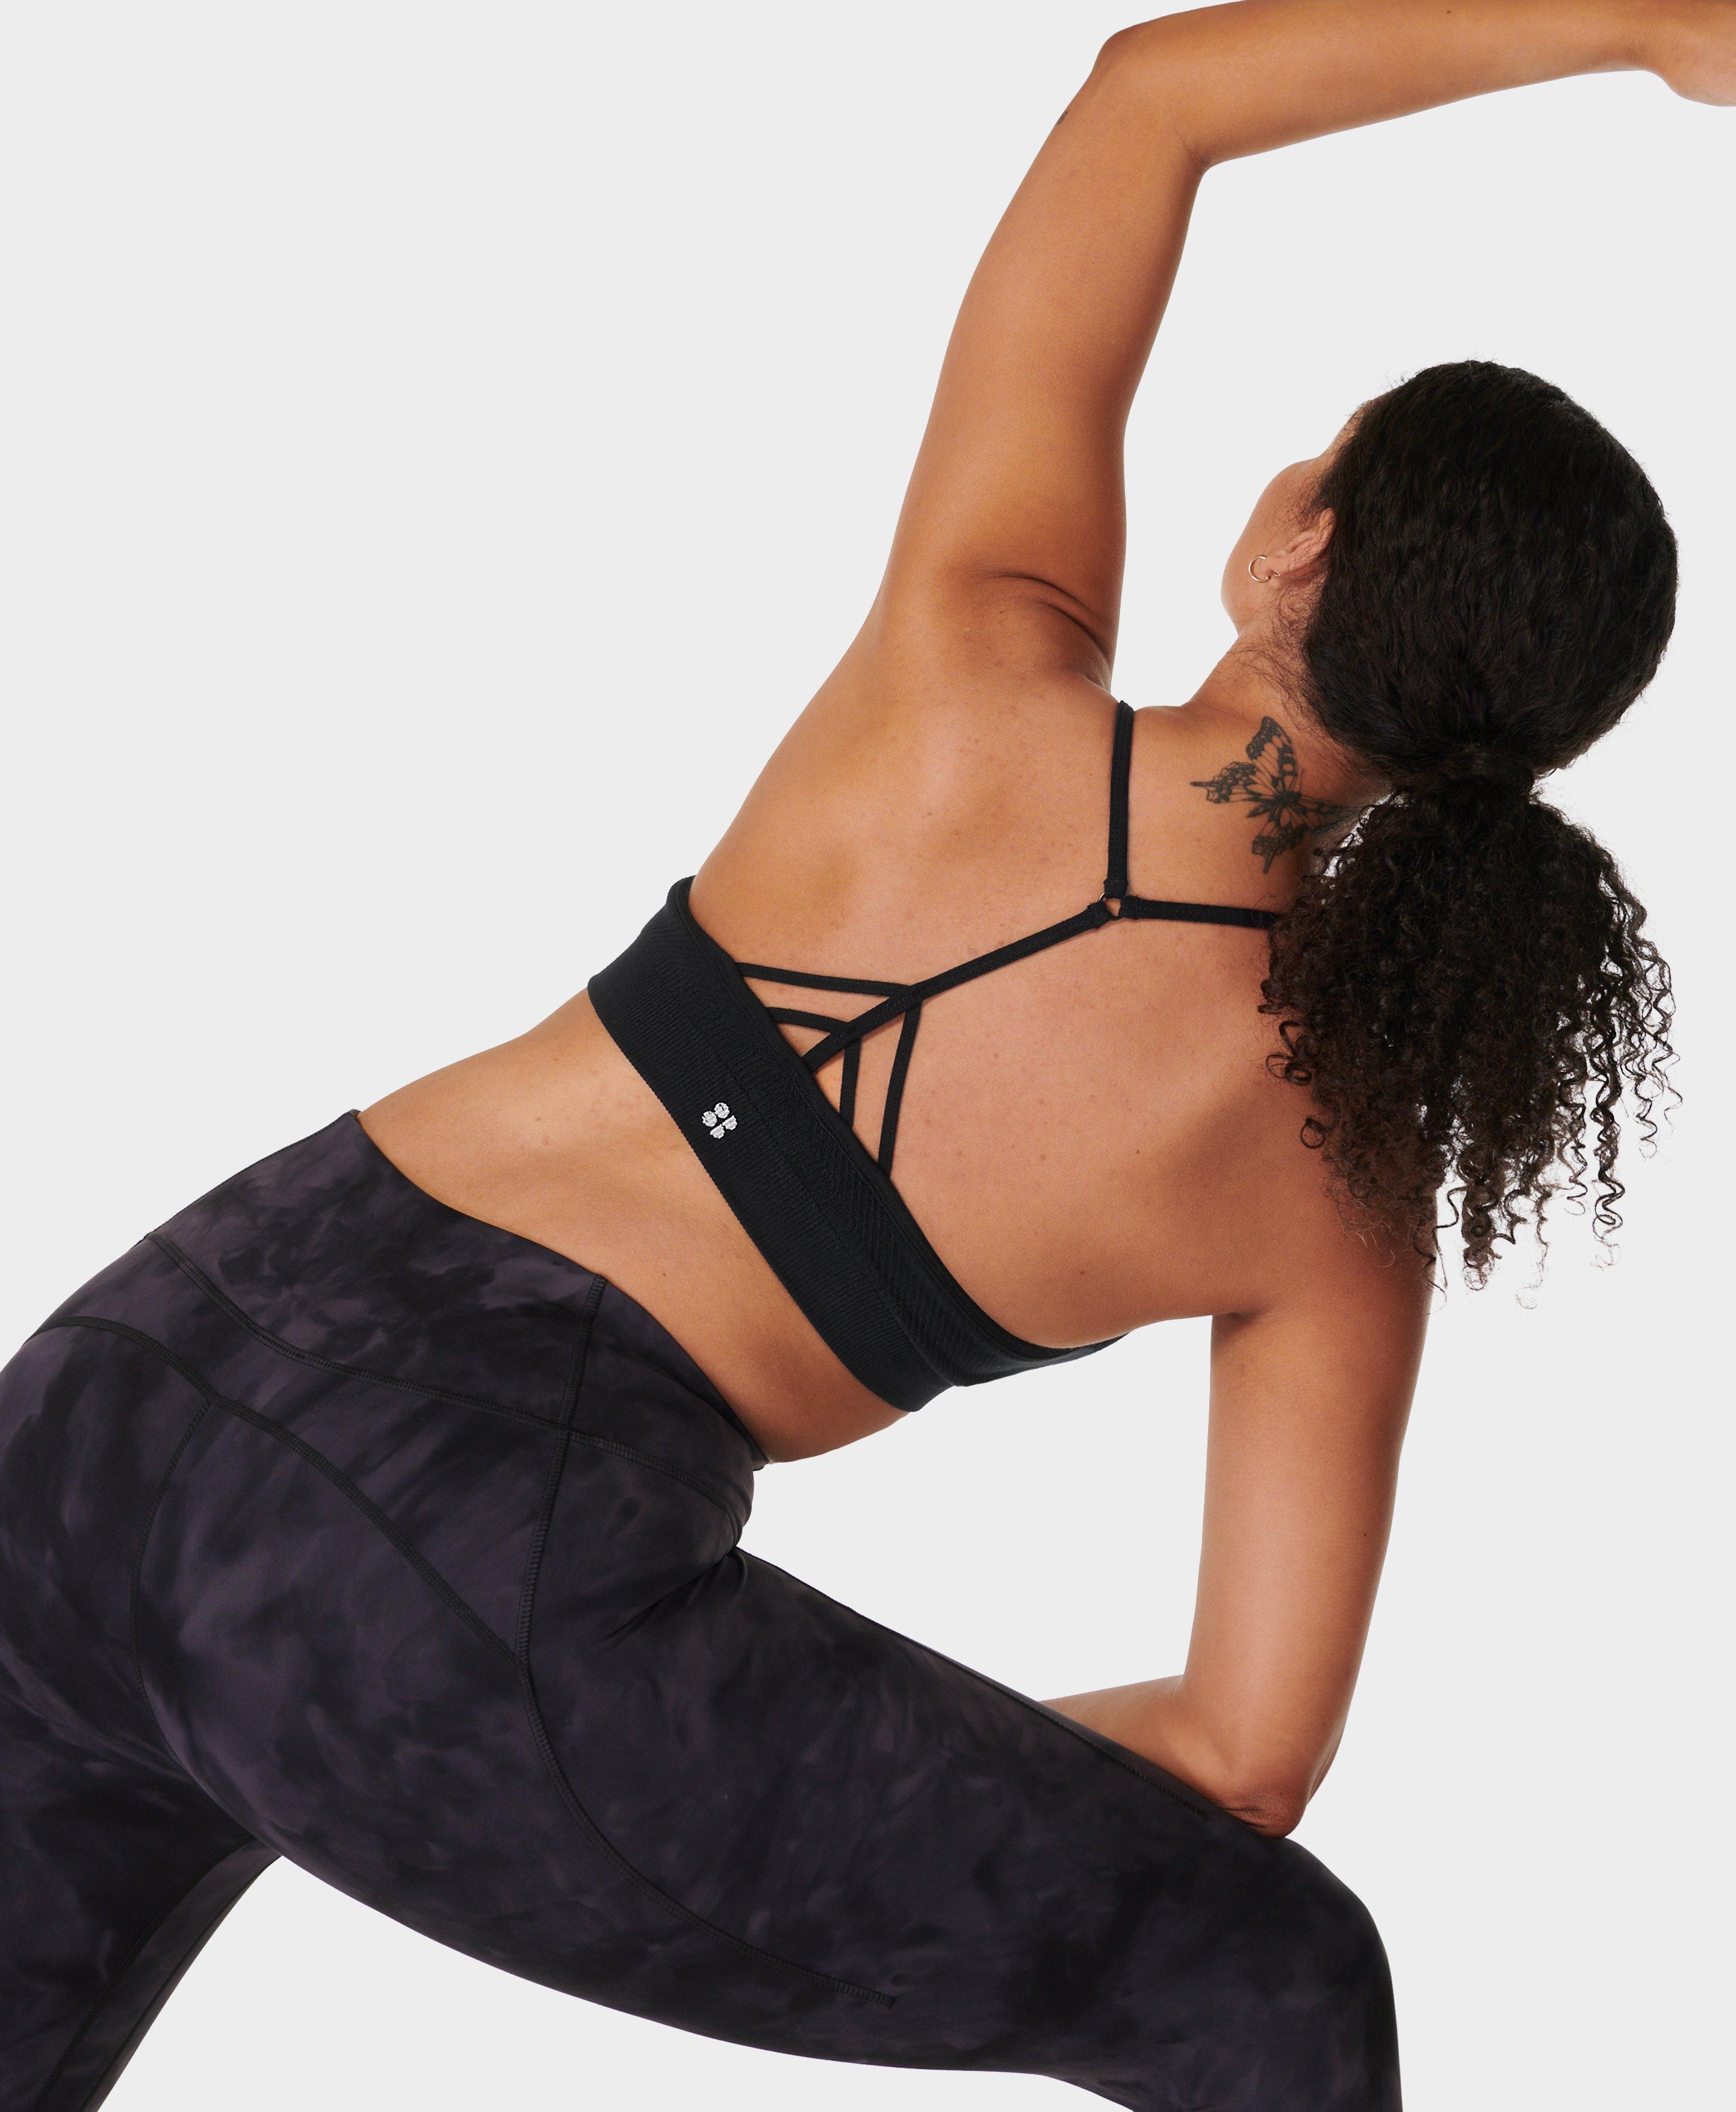 Mindful Seamless Yoga Bra - lilywhite, Women's Sports Bras